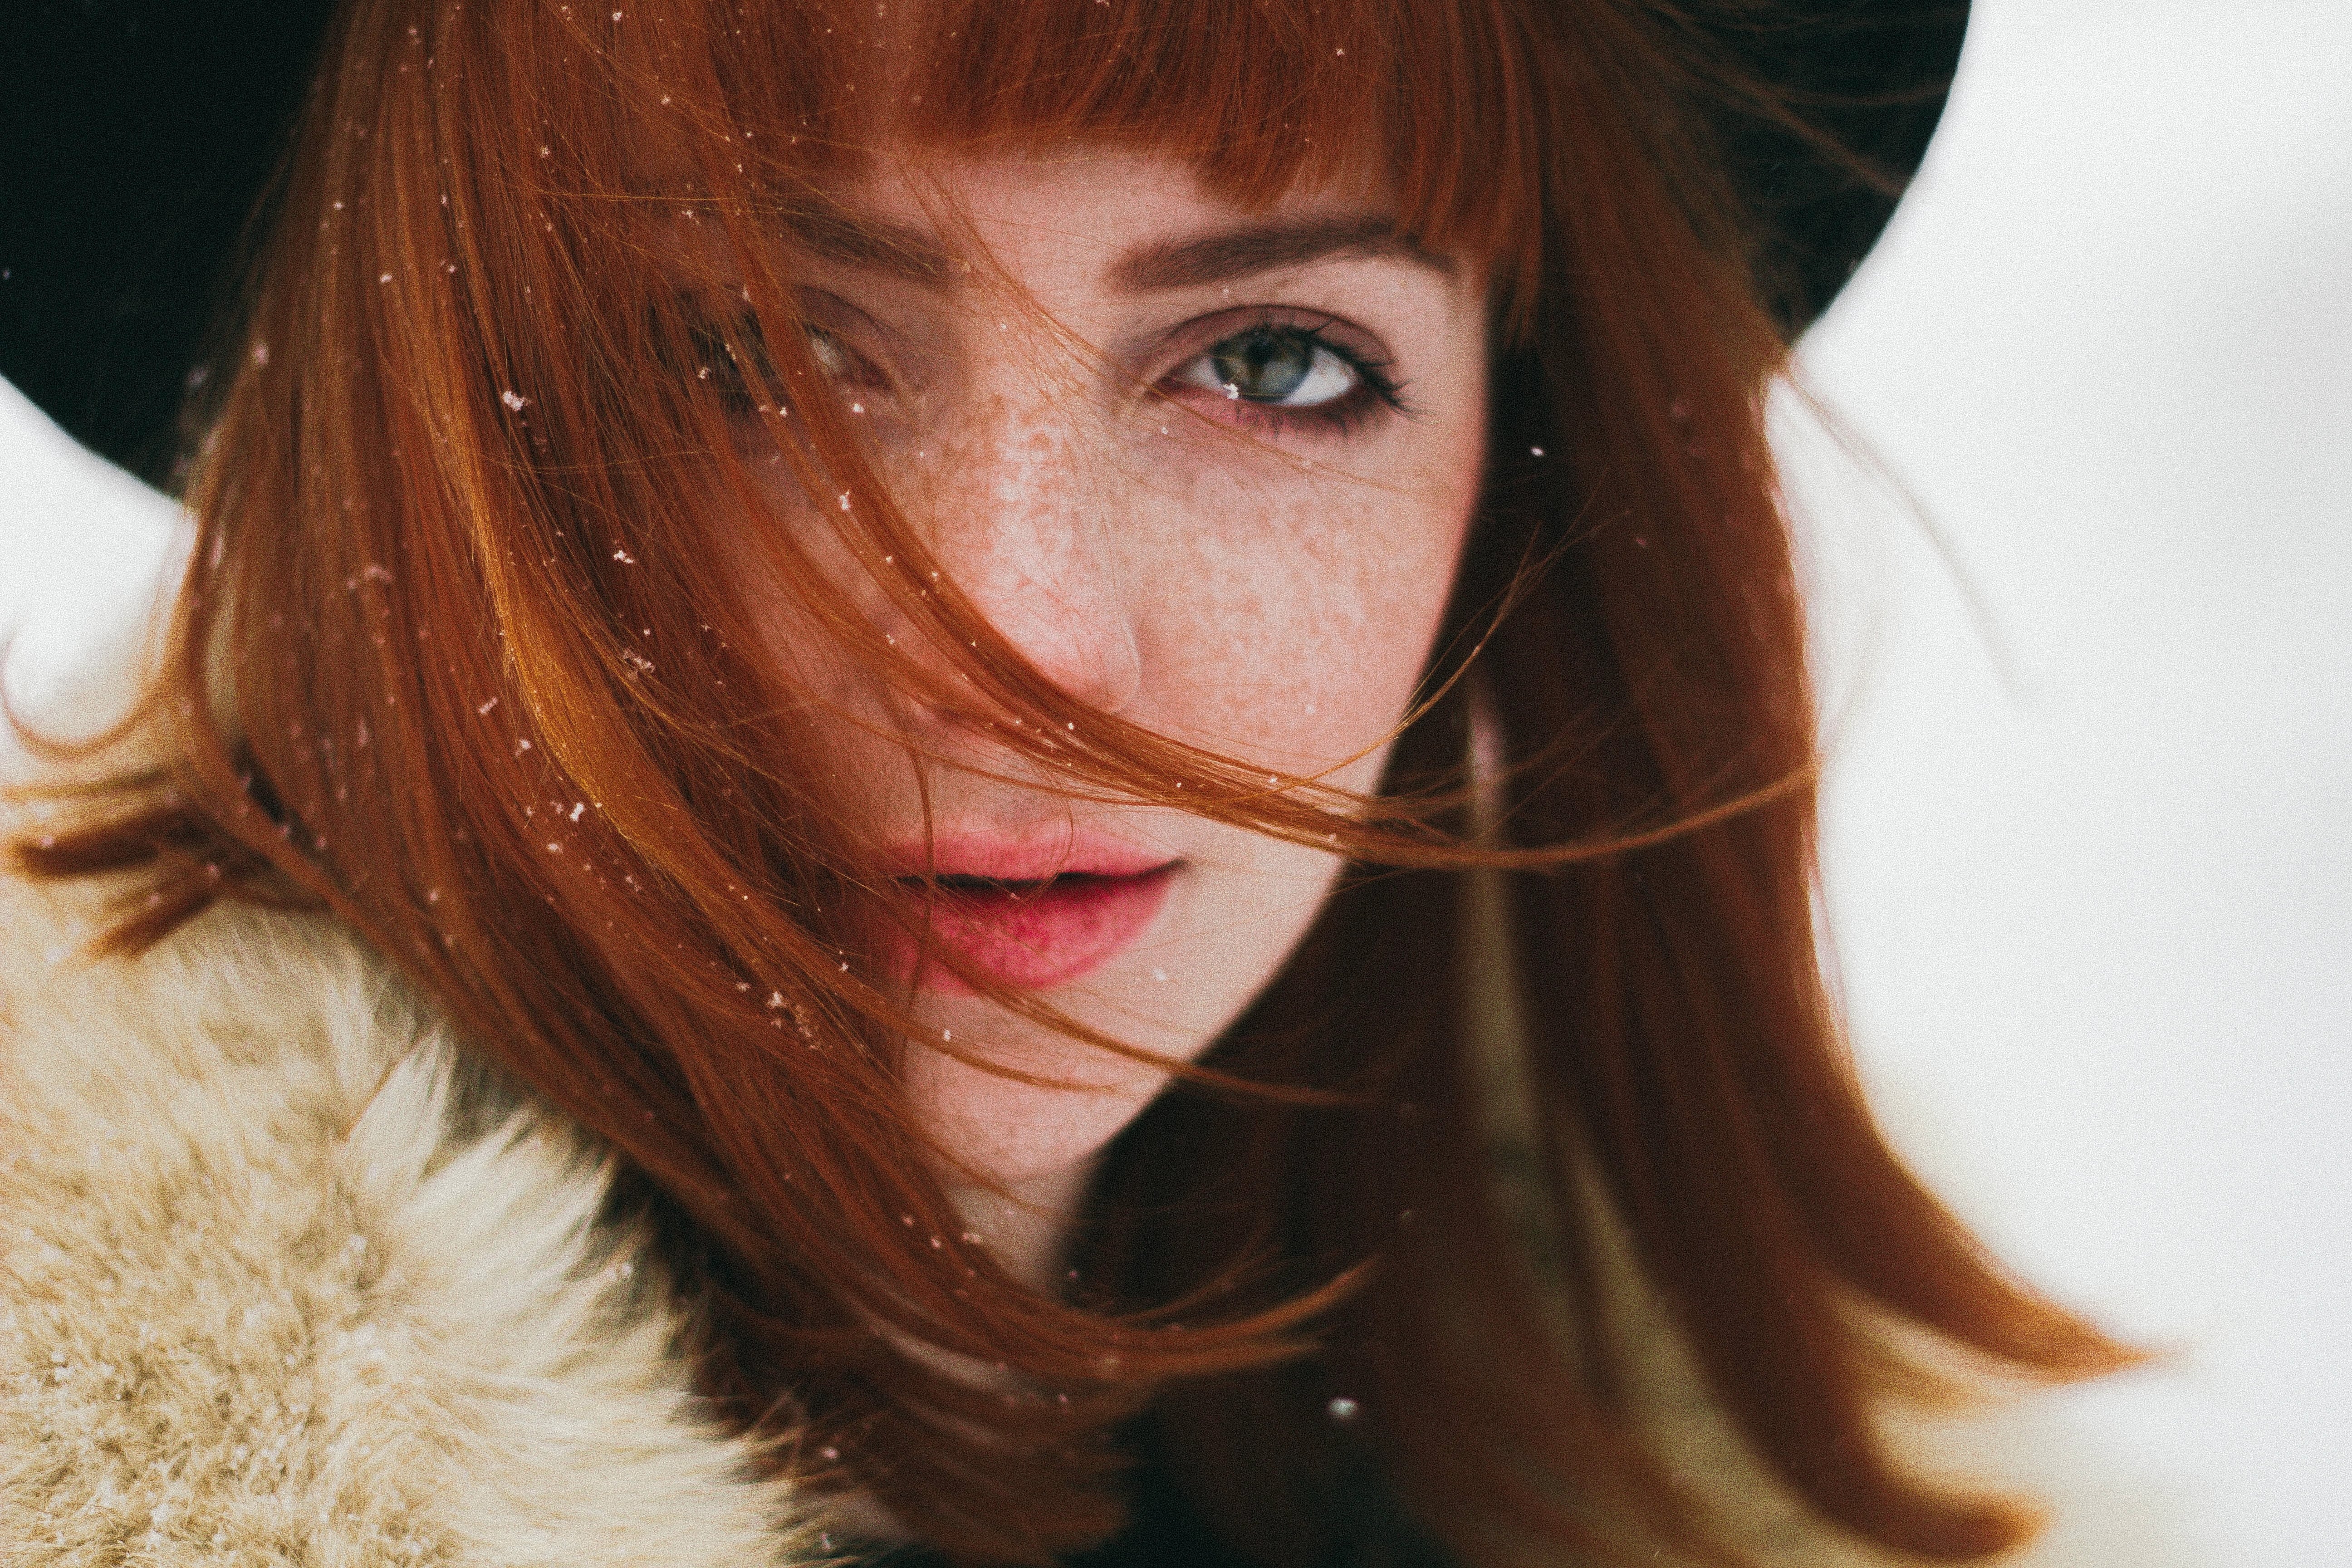 Richtige Pflege im Winter bei trockener Haut & sprödem Haar